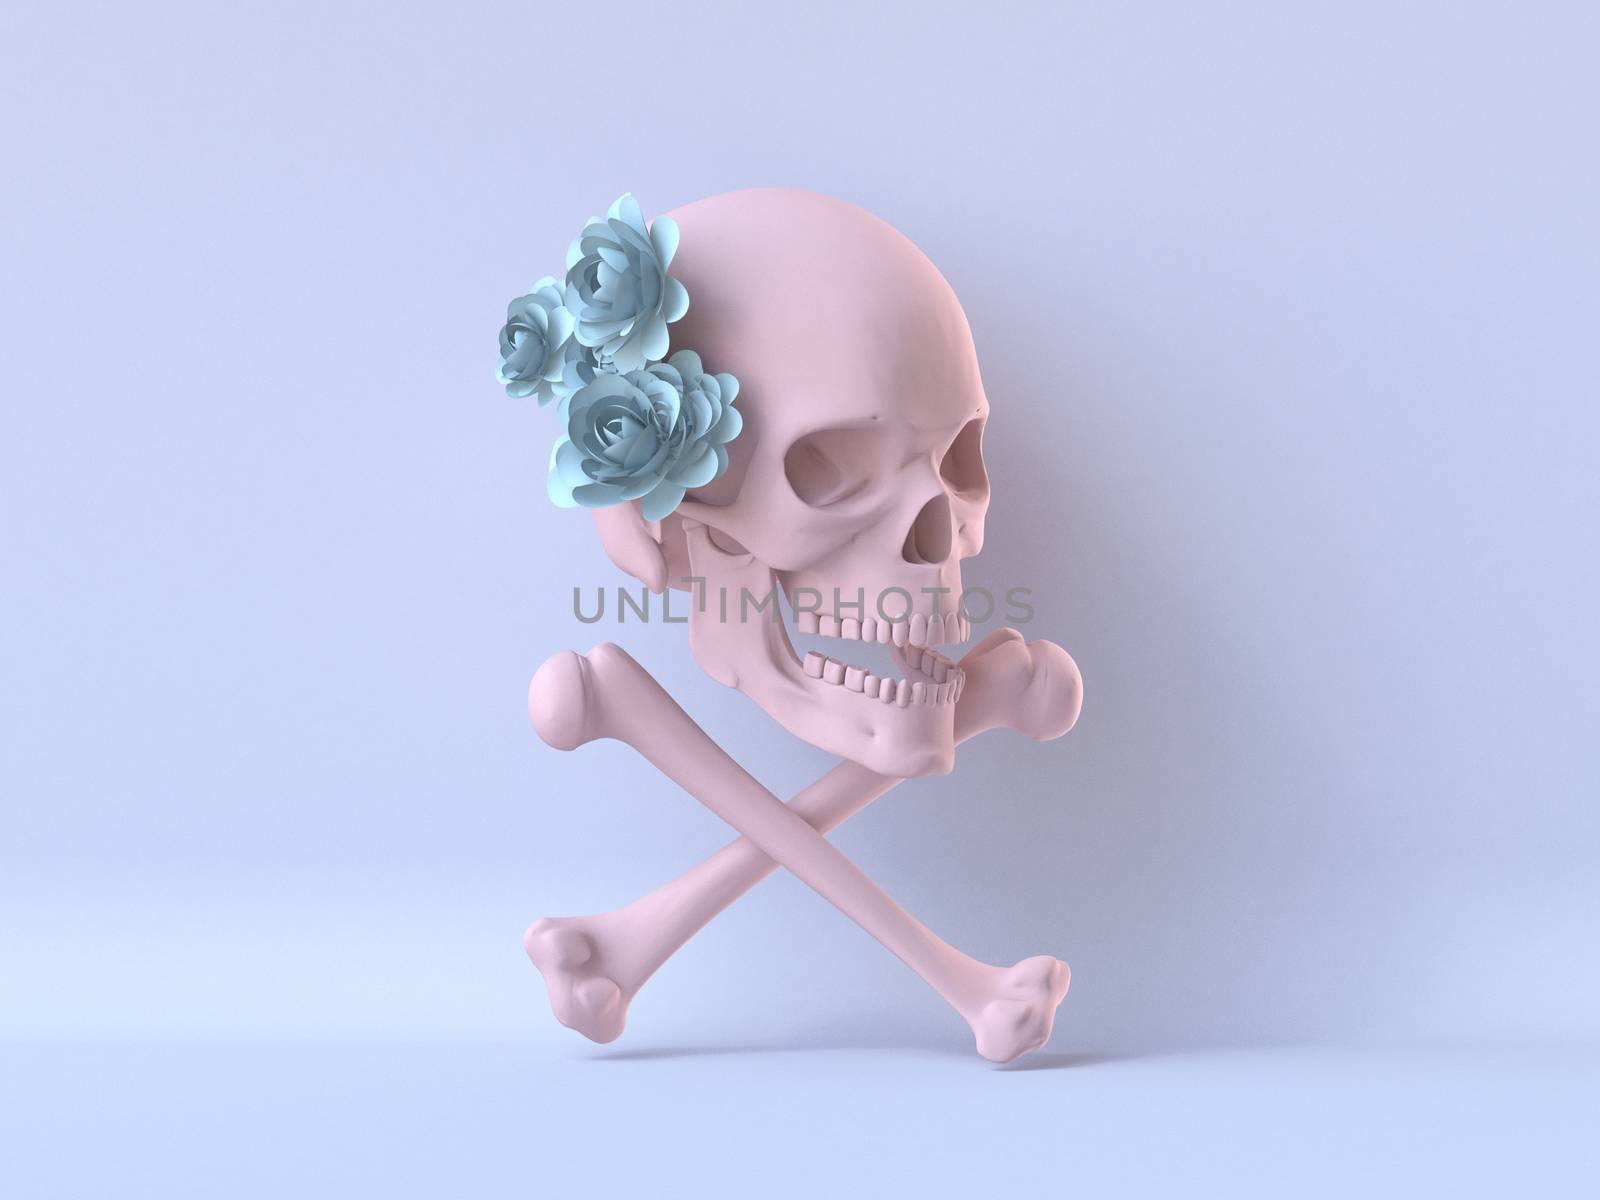 Pink skull with flowers and bones 3D render illustration on blue background